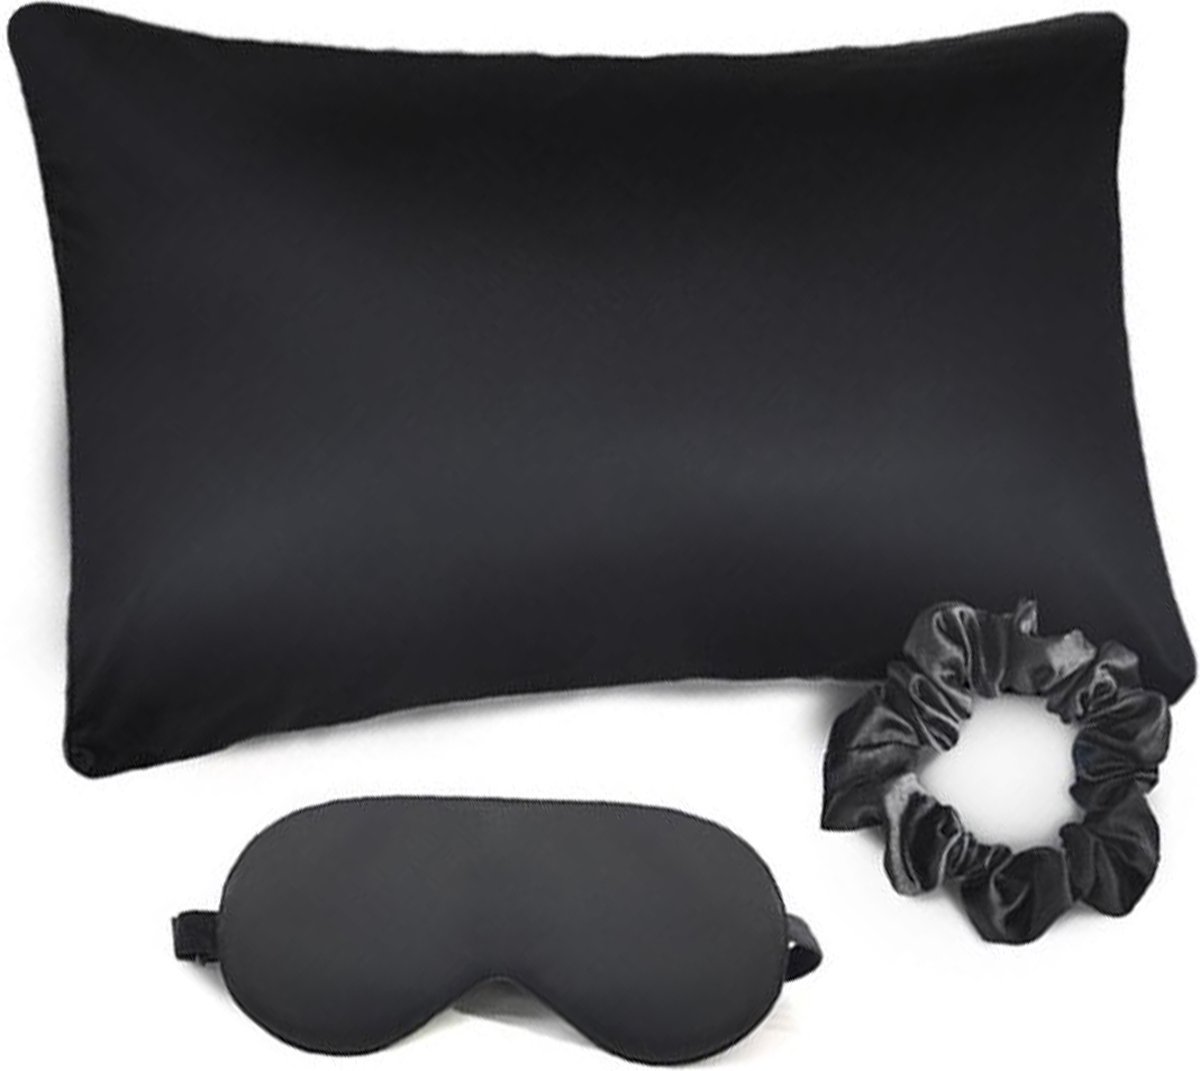 Xd Xtreme - Satijnen kussensloop set - slaap set - scrunchie - slaapmasker - pillow case set - Zwart